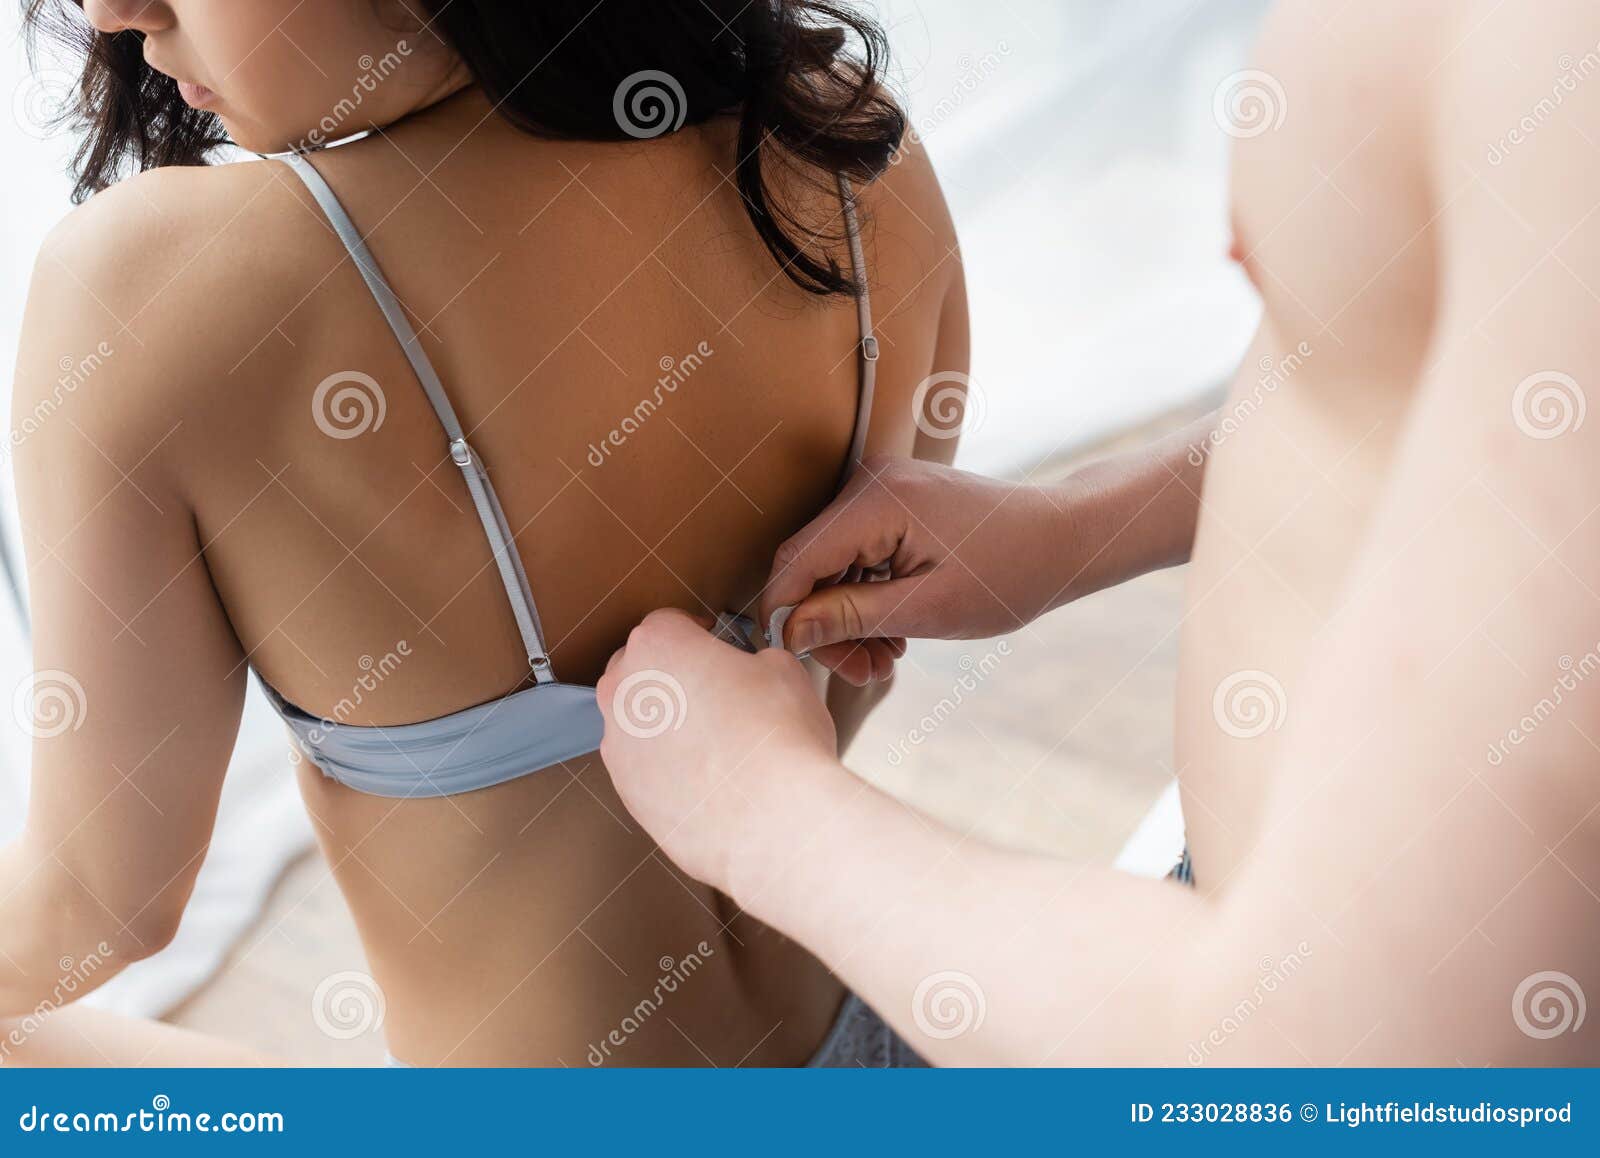 https://thumbs.dreamstime.com/z/cropped-view-man-unhooking-bra-cropped-view-men-unhooking-bra-sexy-girlfriend-bedroom-stock-image-233028836.jpg